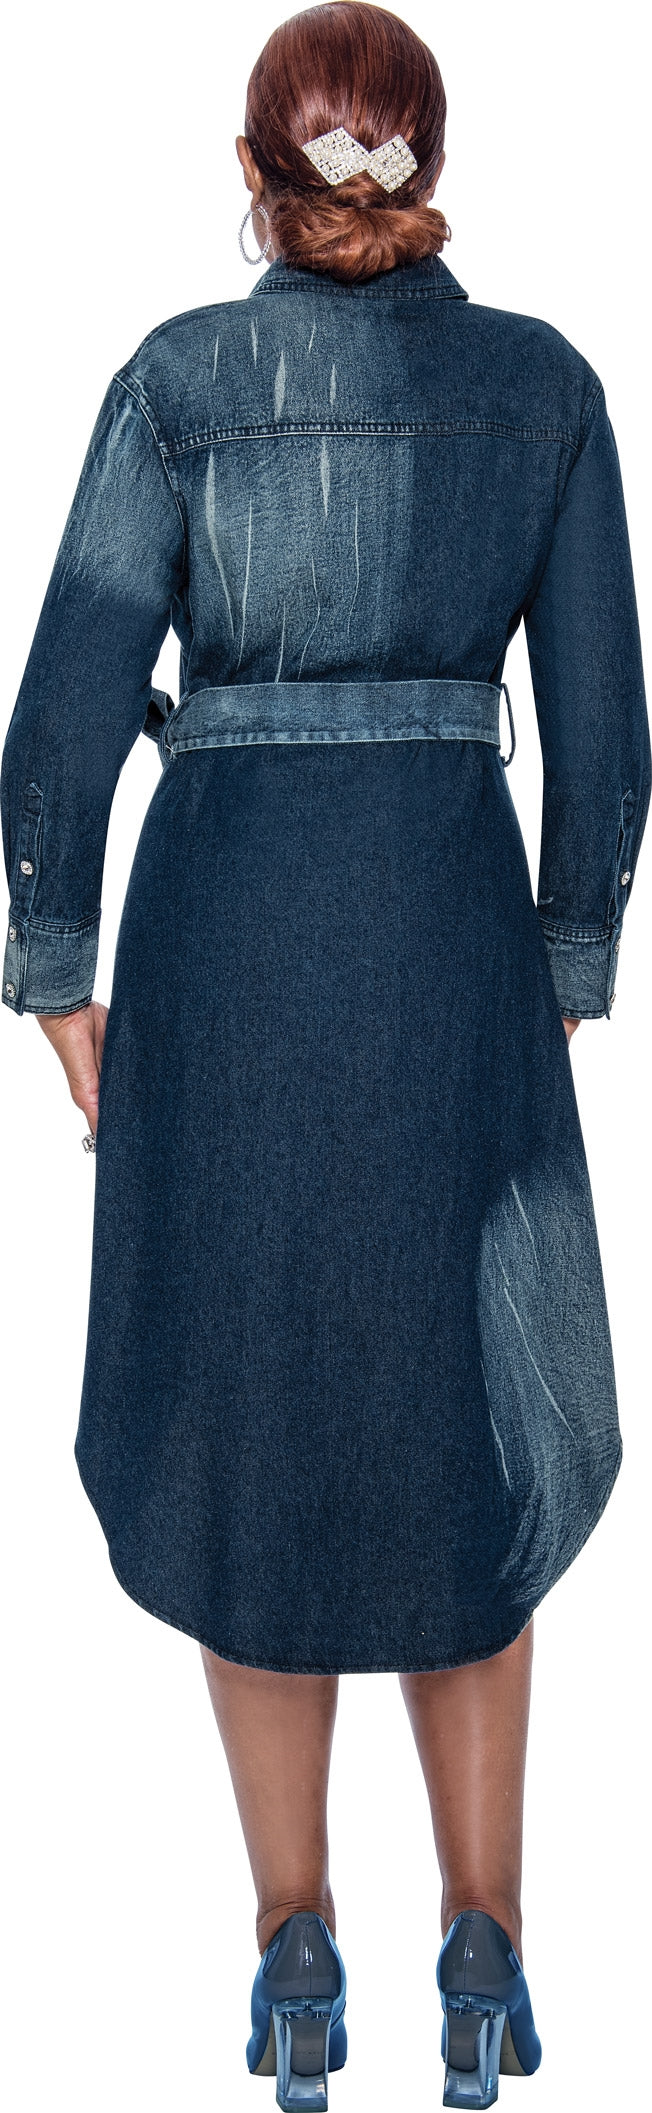 Dorinda Clark Cole Dress 4981 - Church Suits For Less